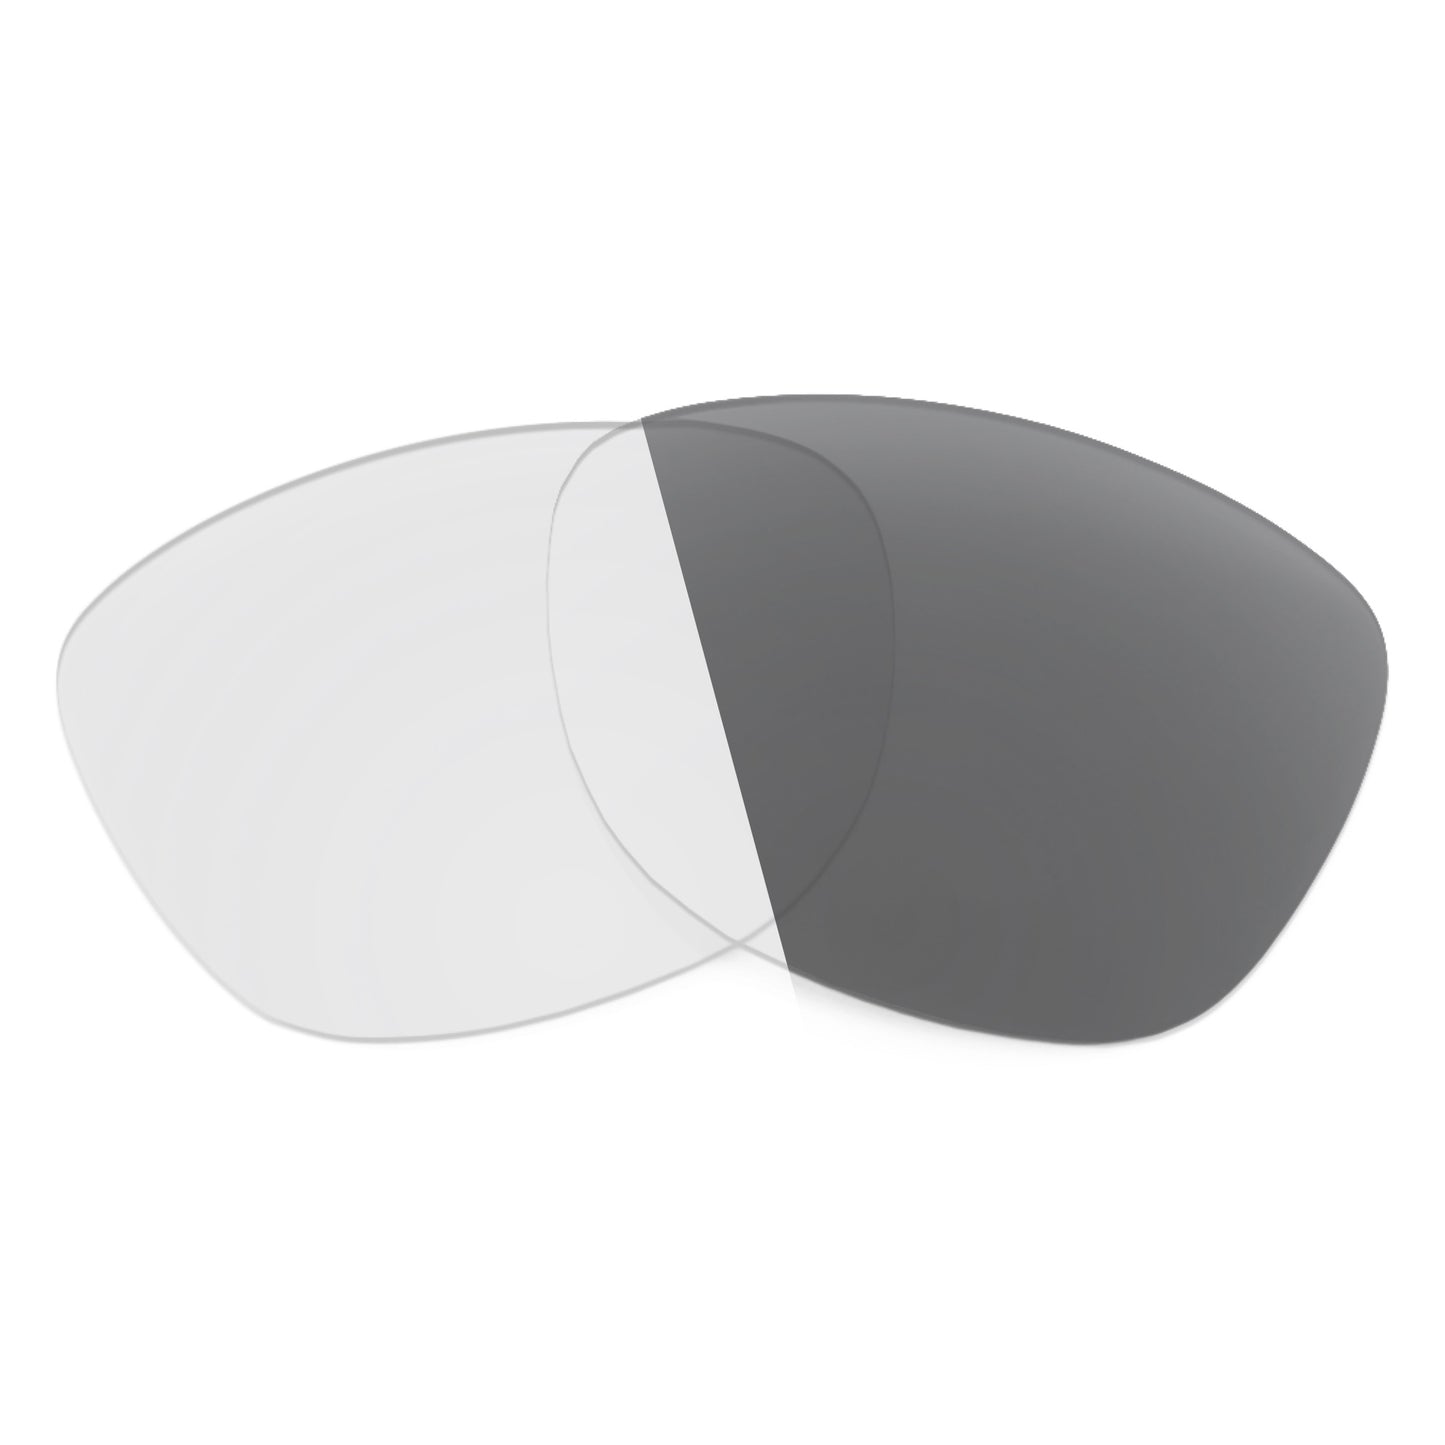 Revant replacement lenses for Maui Jim Hana Bay MJ434 Non-Polarized Adapt Gray Photochromic